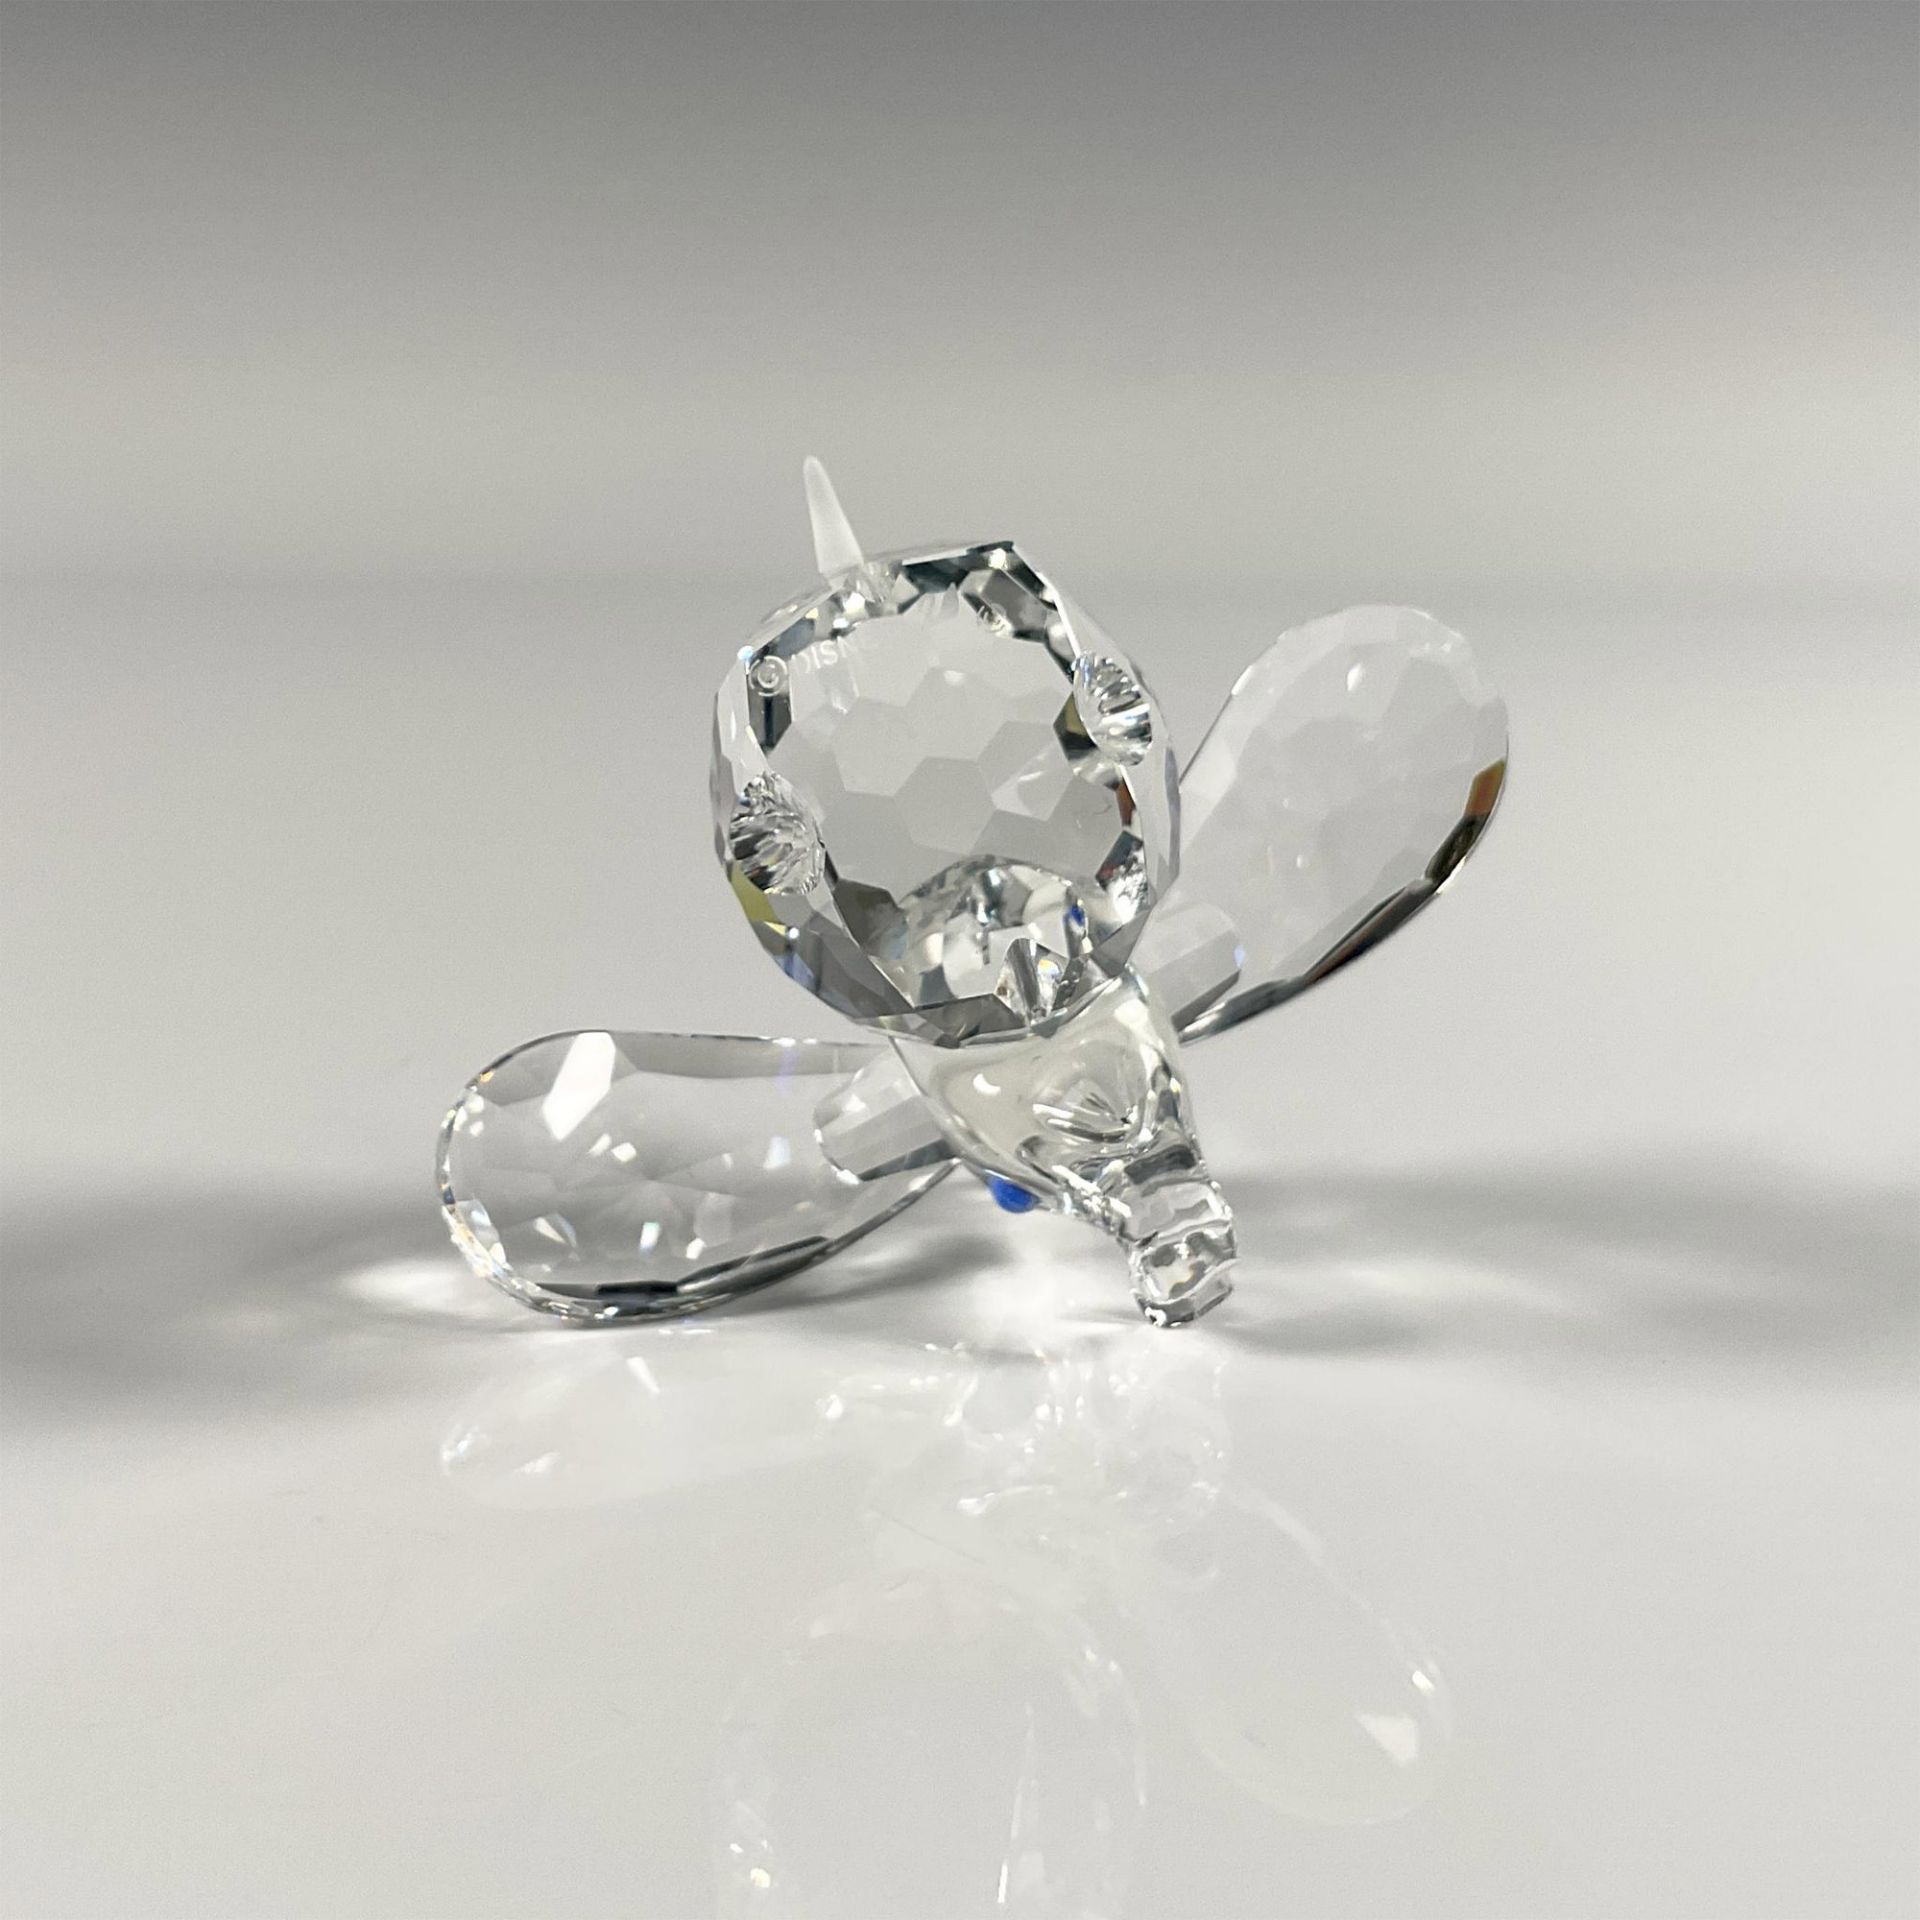 Swarovski Crystal Disney Figurine, Dumbo - Image 3 of 3